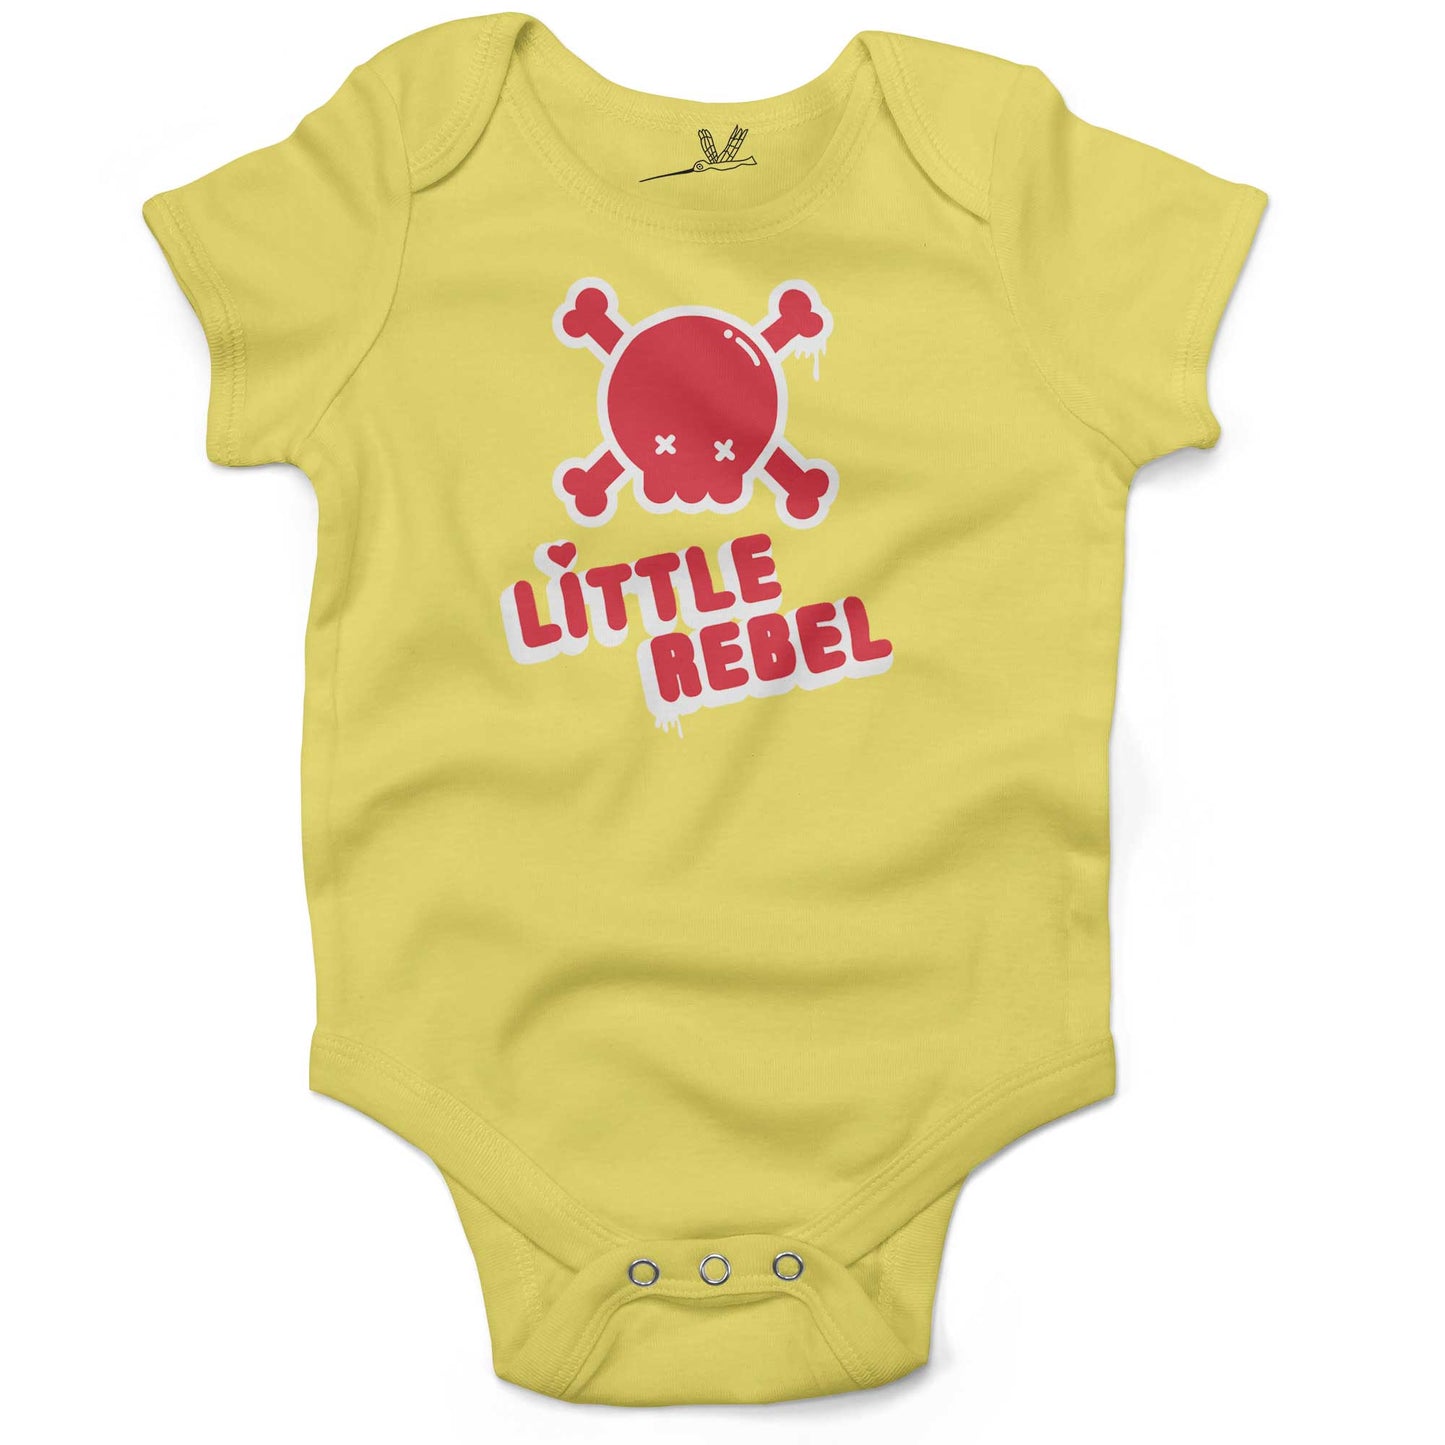 Little Rebel Infant Bodysuit or Raglan Baby Tee-Yellow-3-6 months